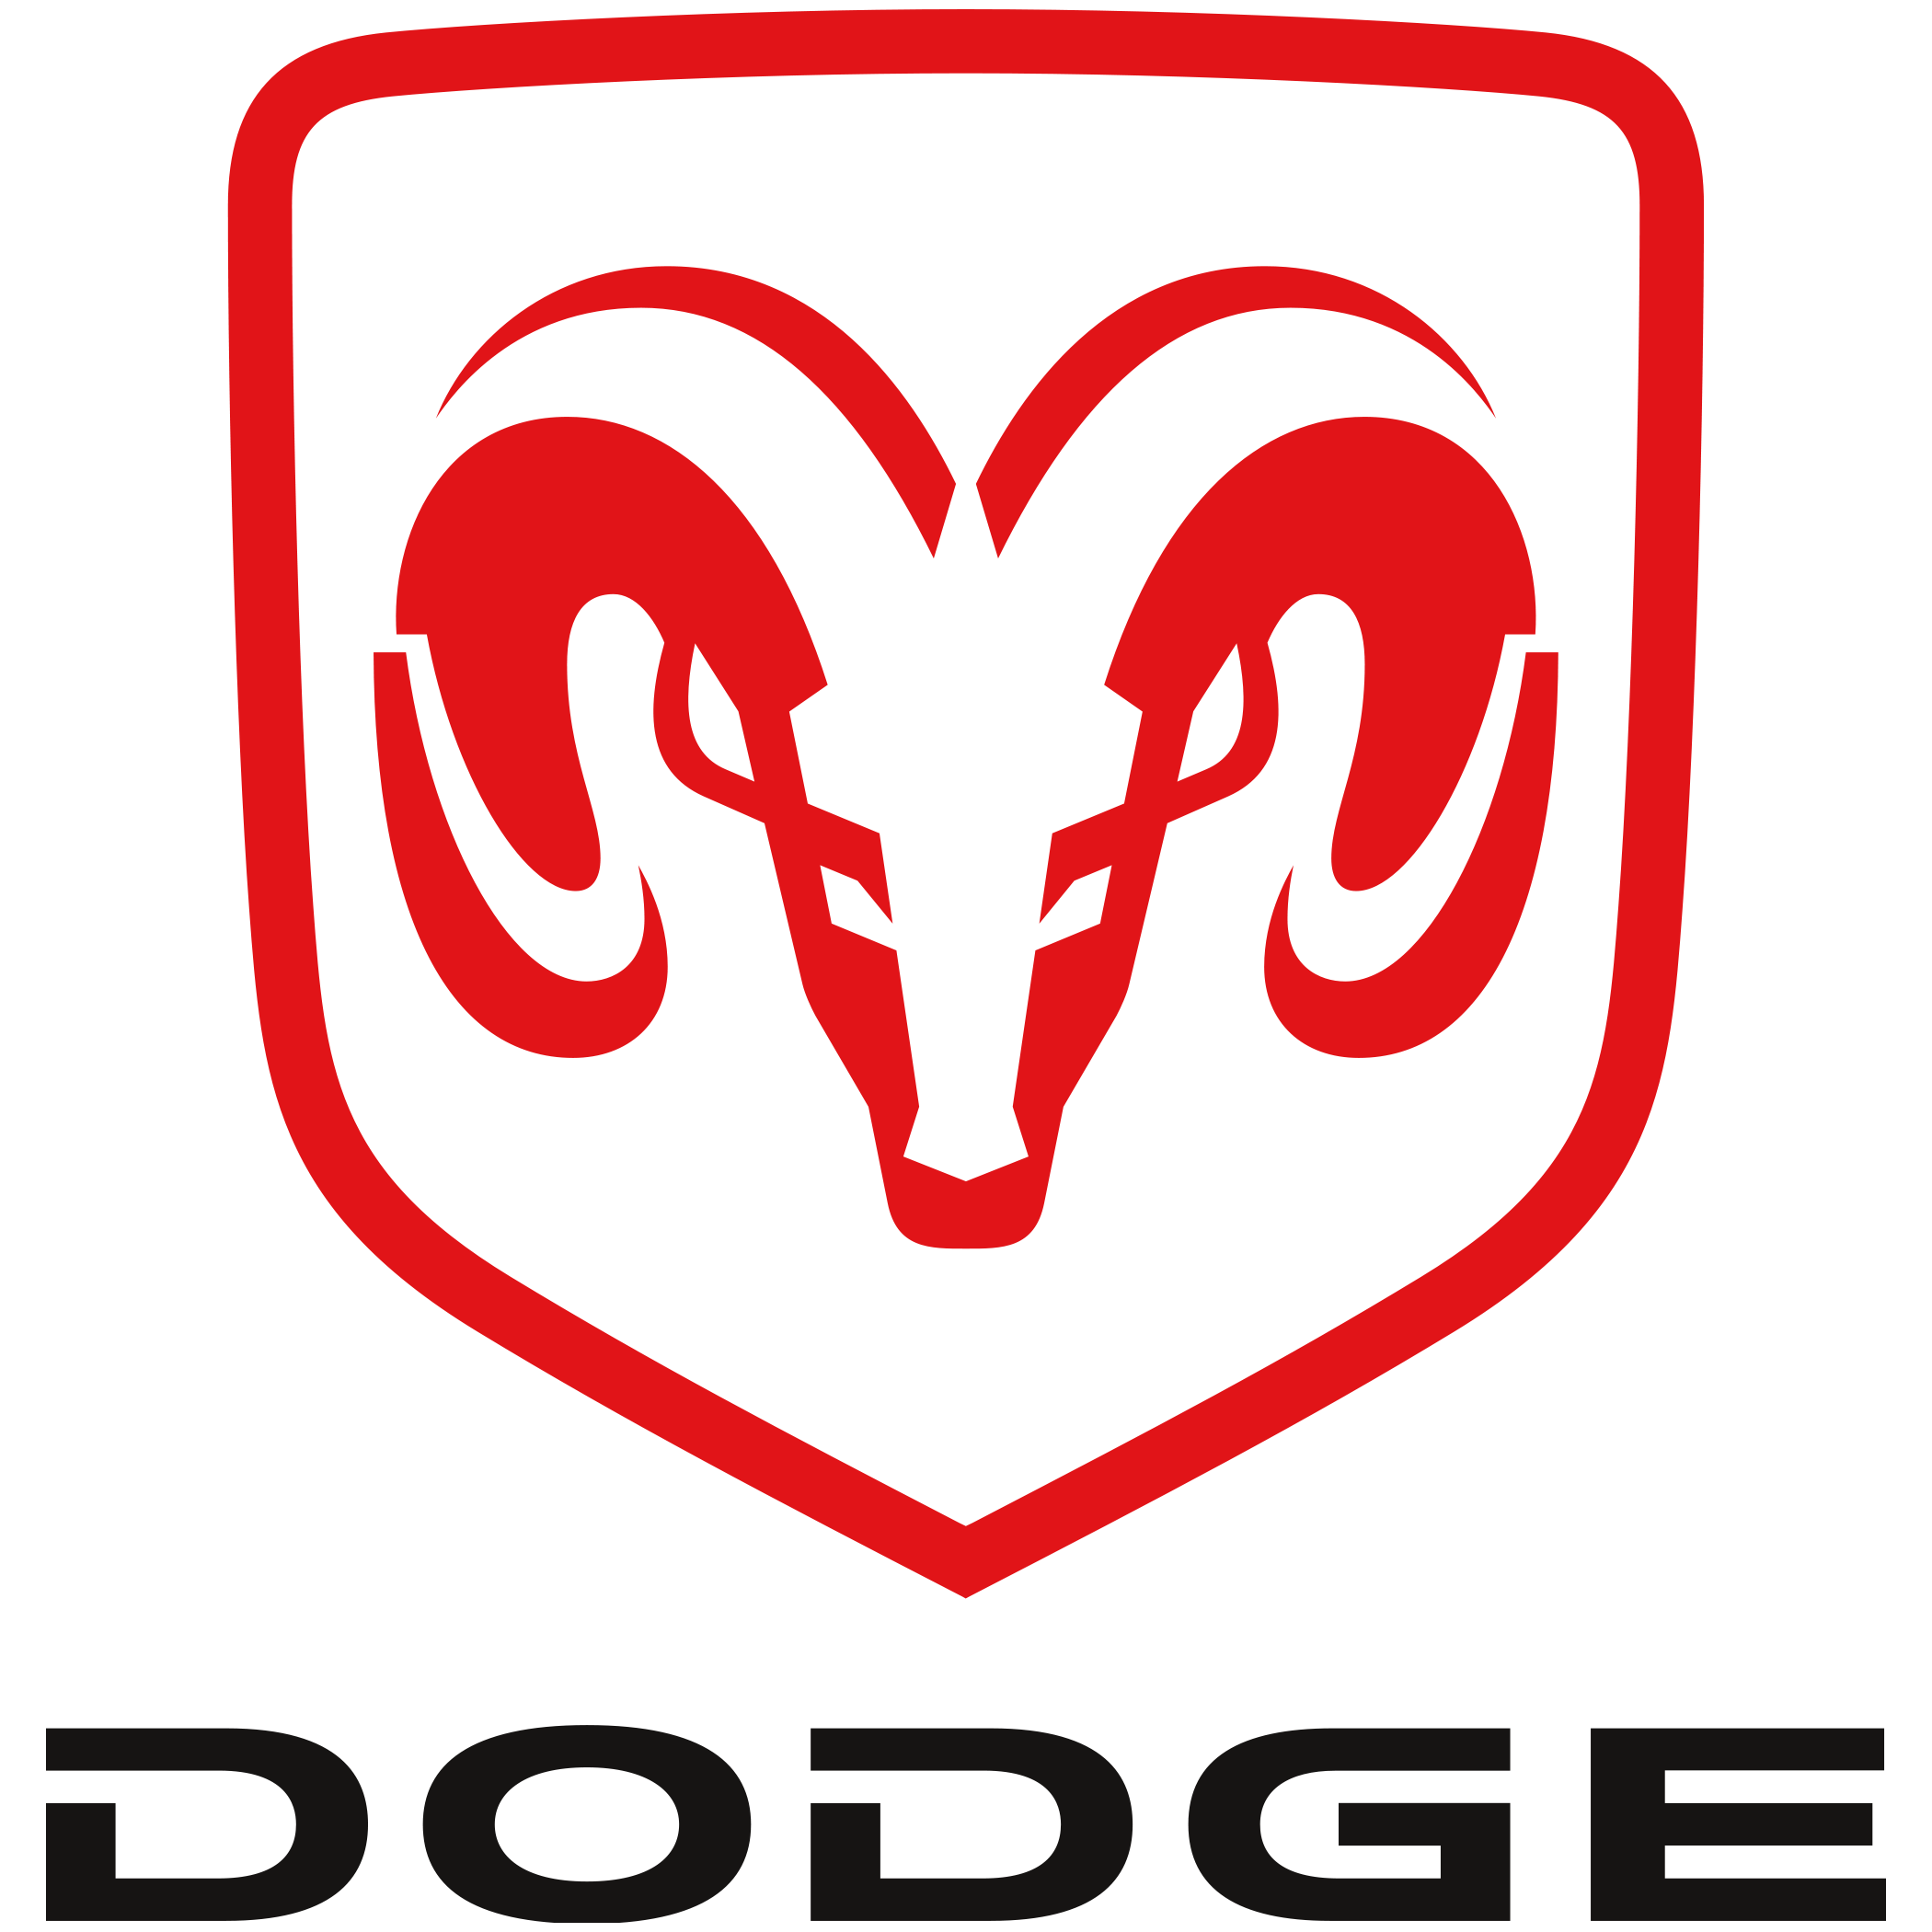 Dodge Logo Dodge Logo History